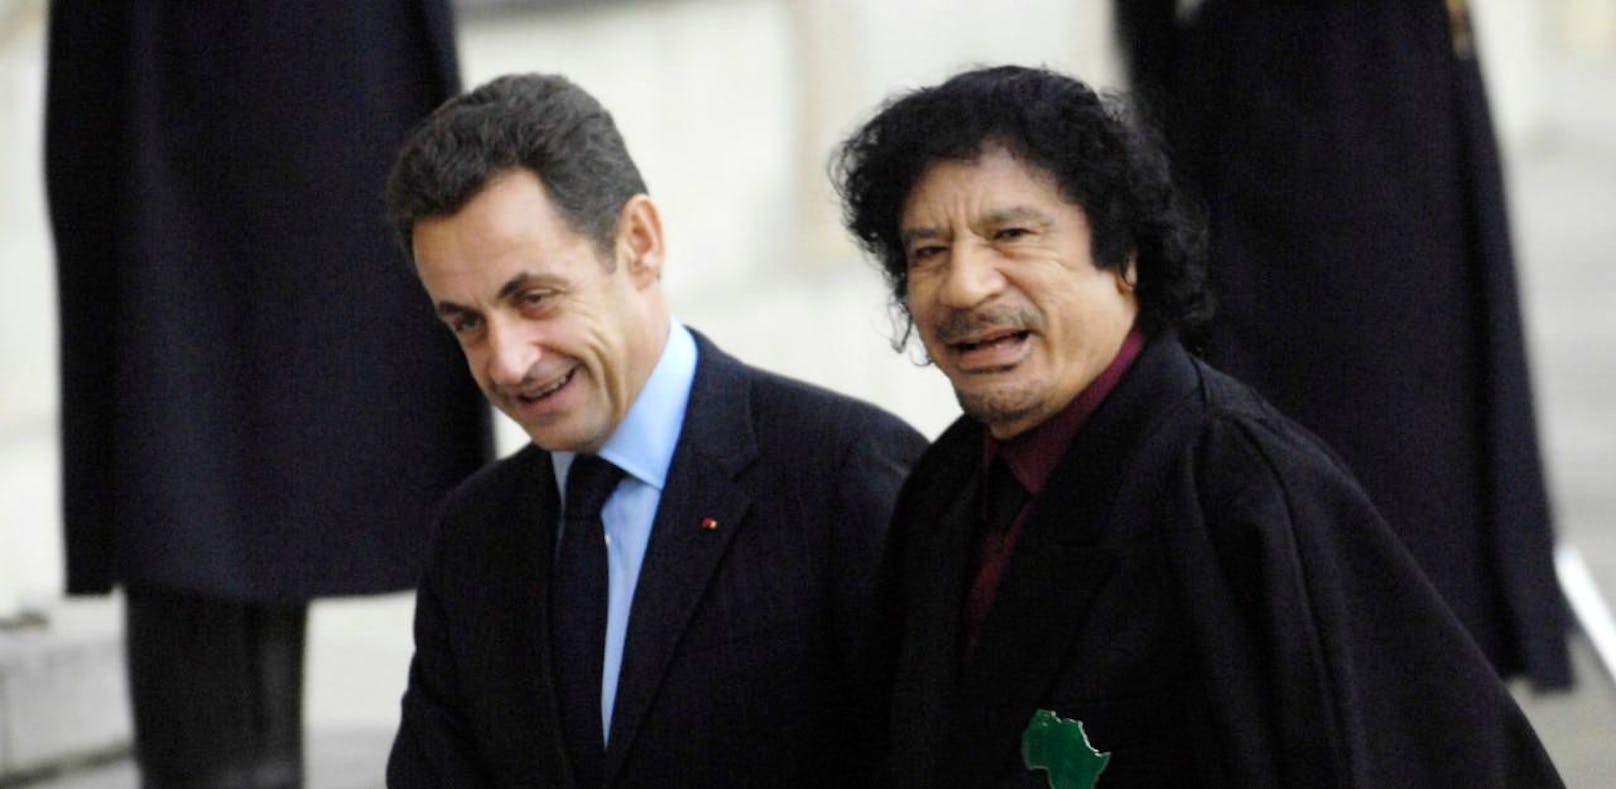 Nicolas Sarkozy in Polizeigewahrsahm